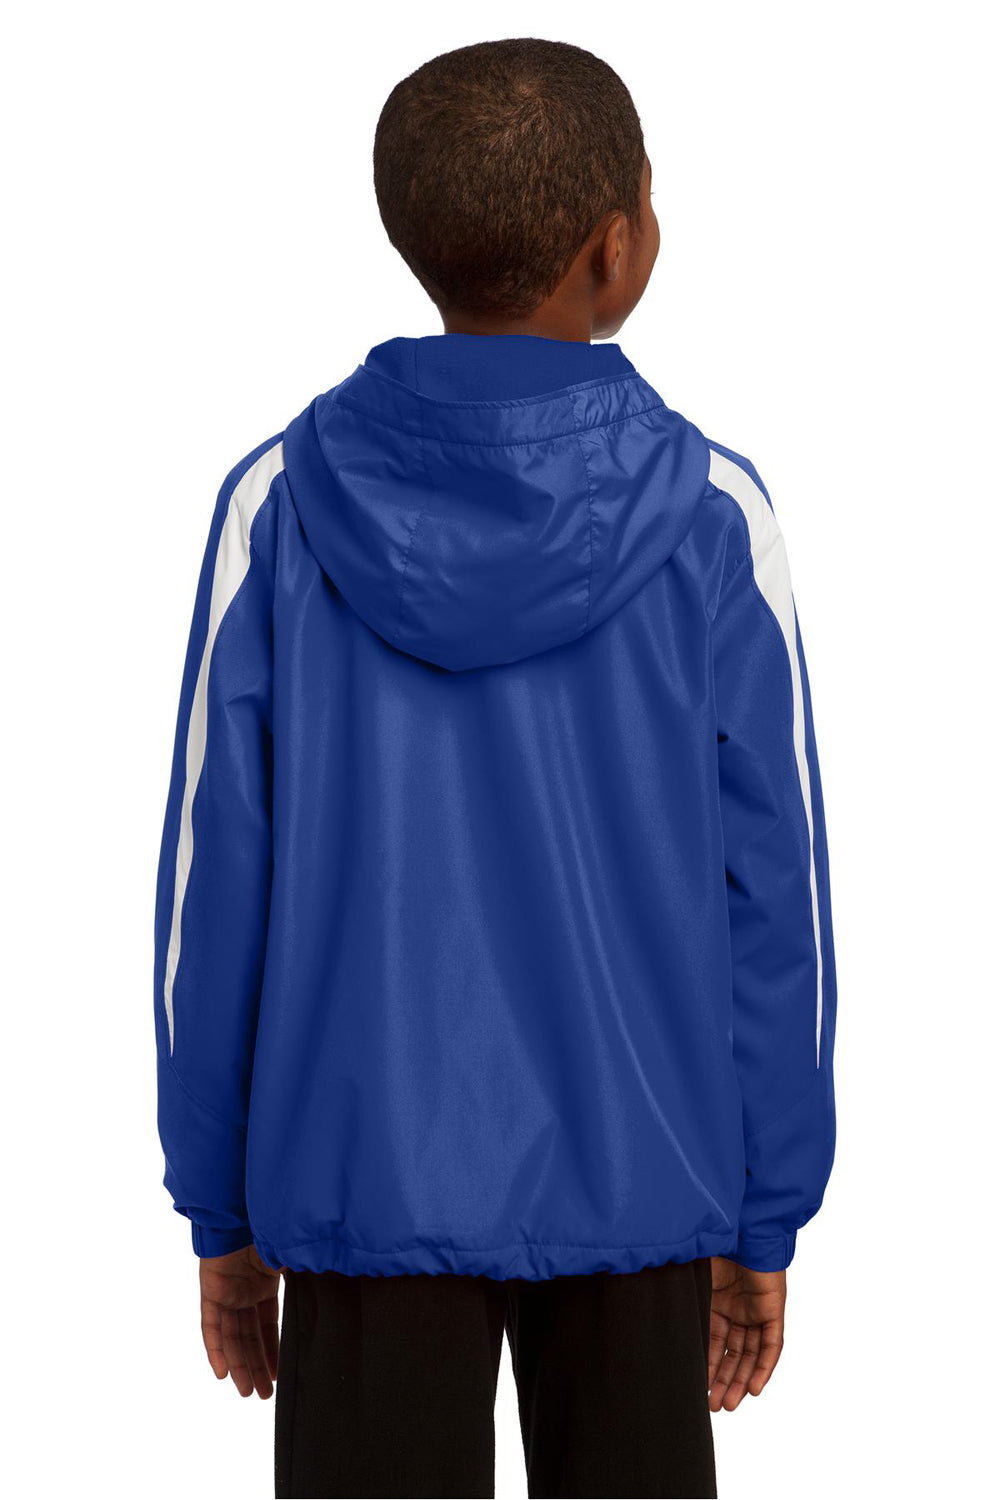 Sport-Tek YST81 Youth Full Zip Hooded Jacket Royal Blue Back